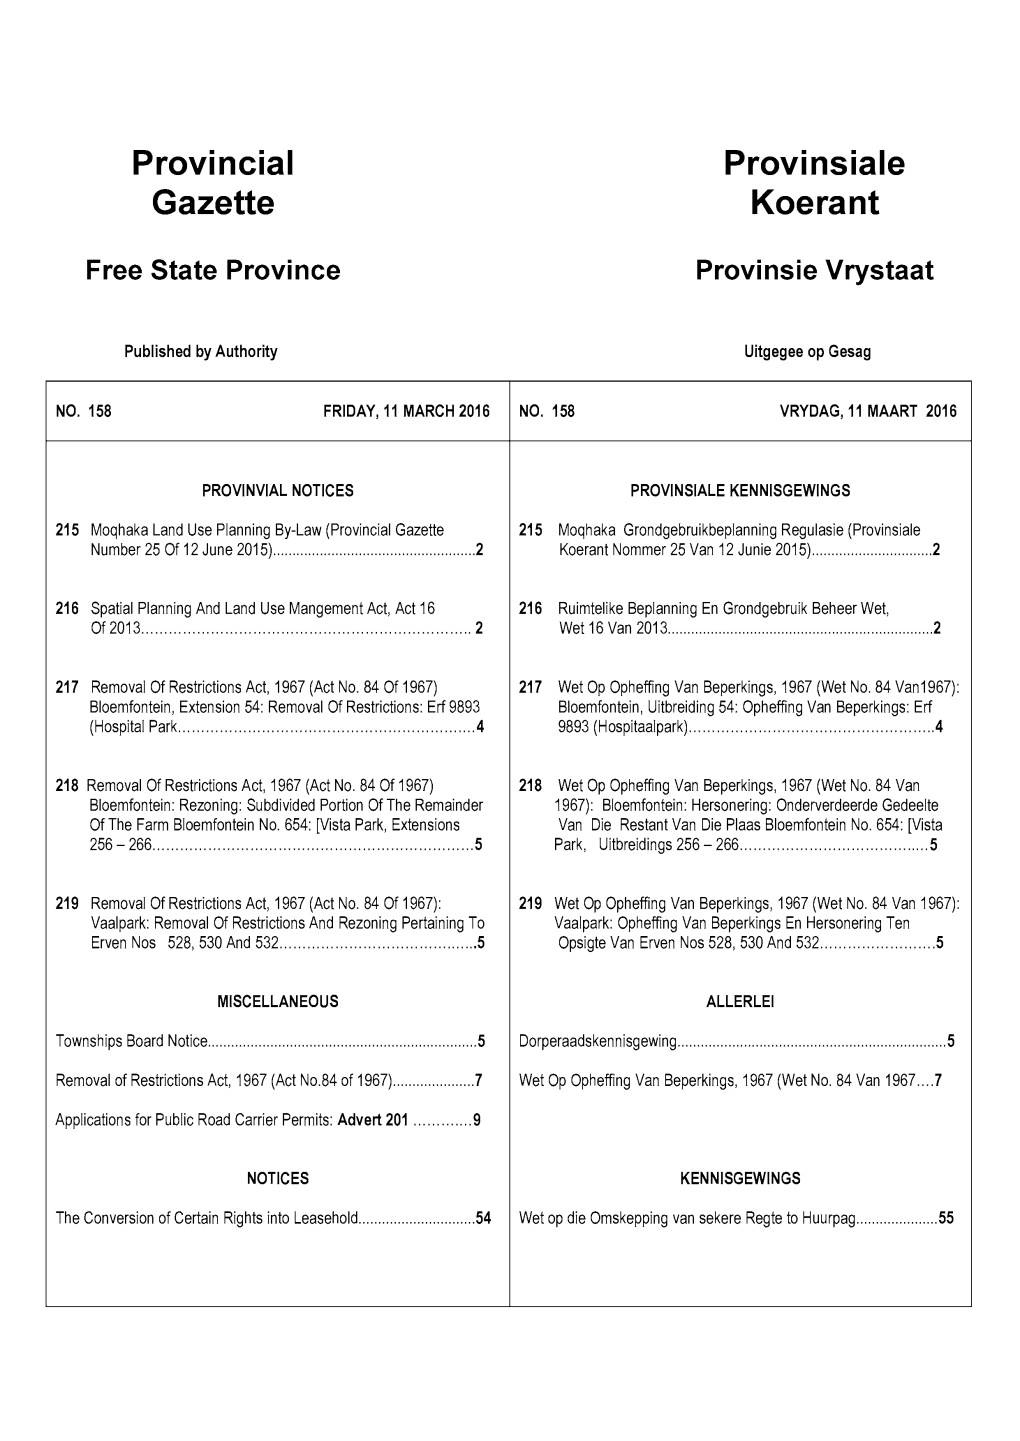 Provincial Gazette Free State Province